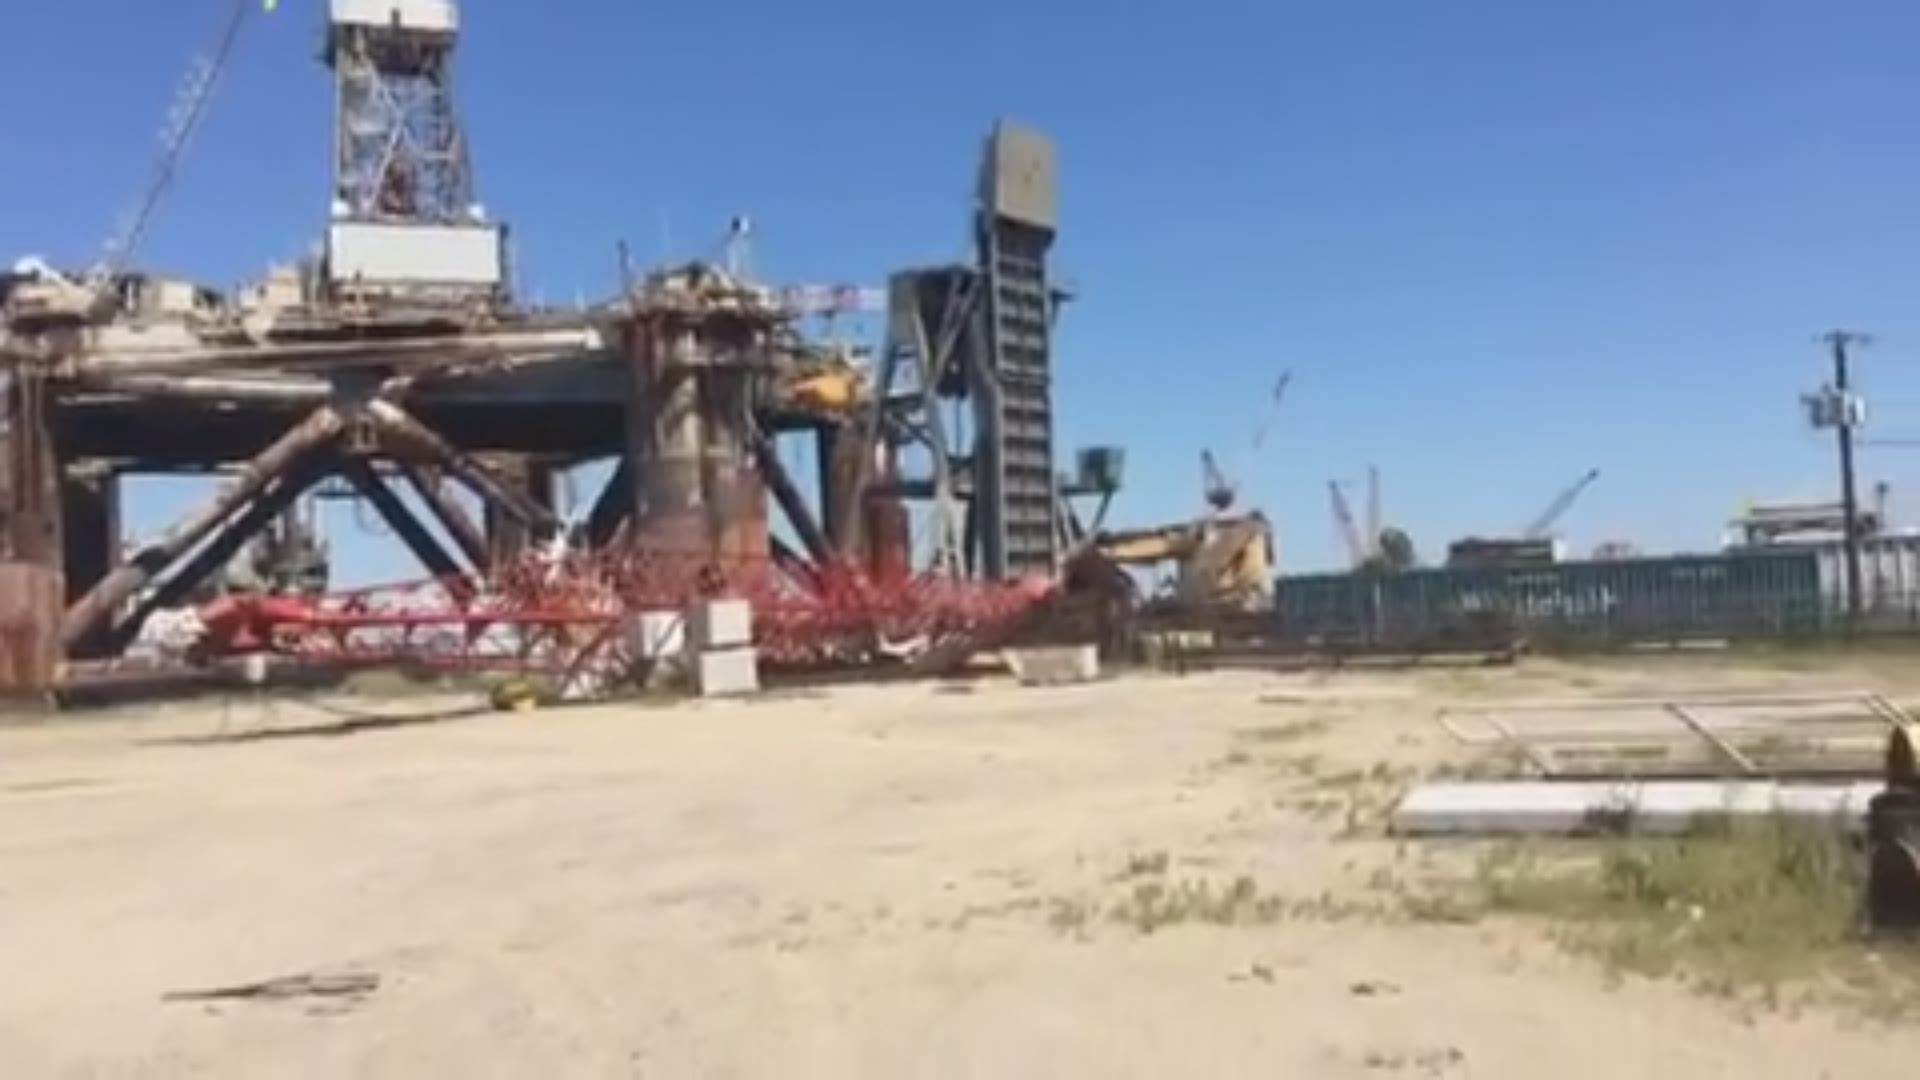 Person injured in crane collapse at Sabine Pass shipyard